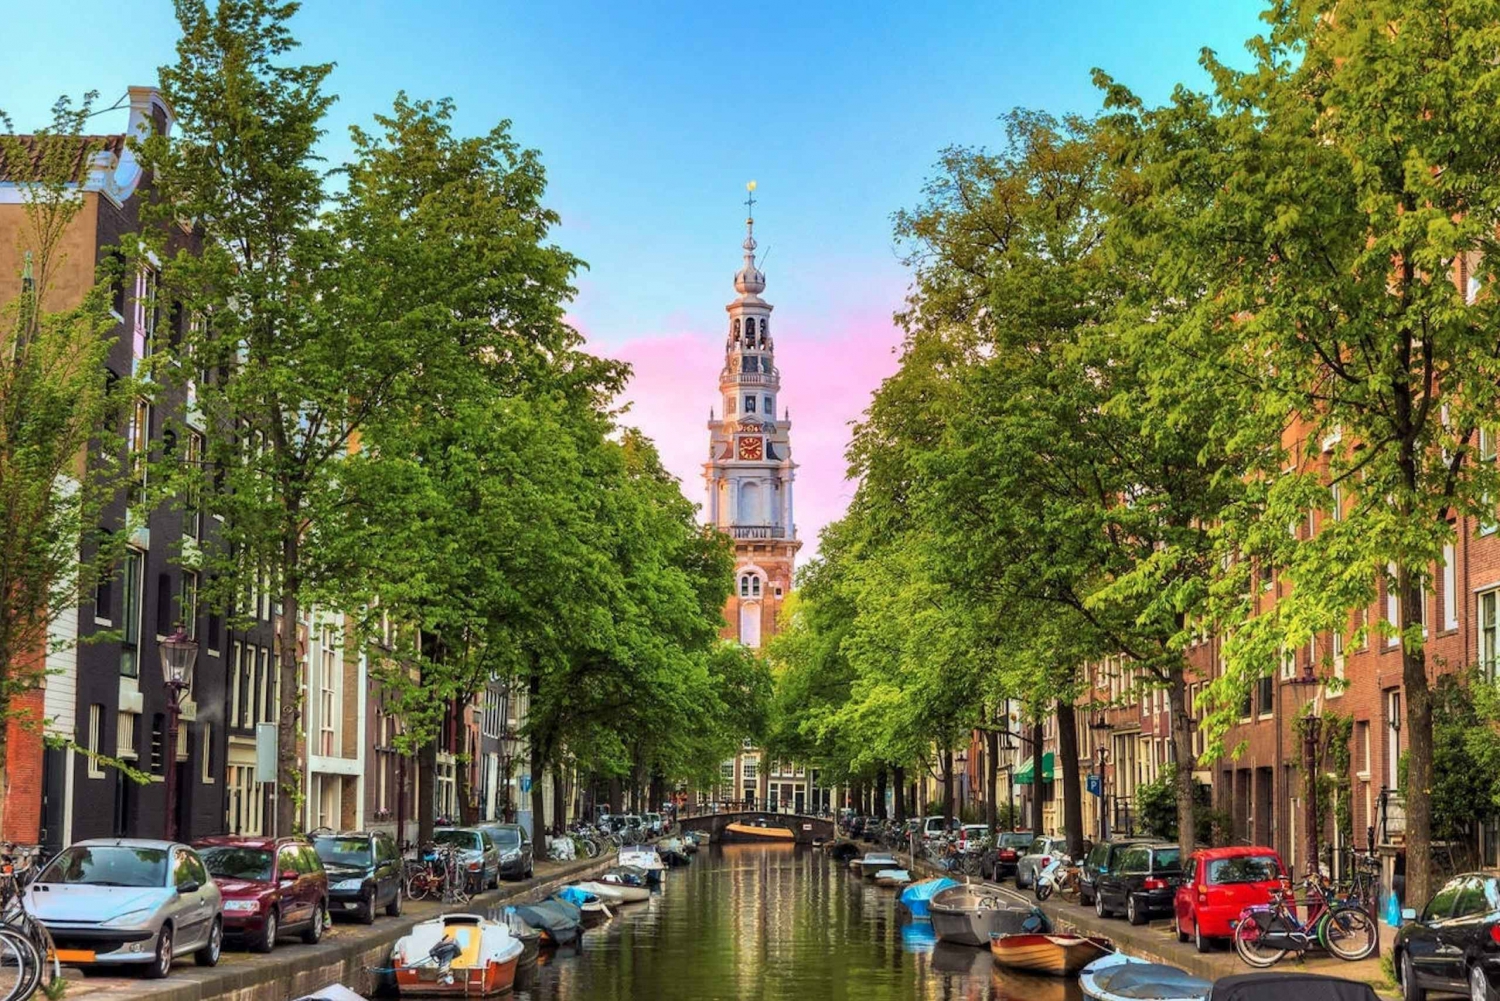 Picture Perfect Amsterdam: Ein Foto-Tour-Erlebnis